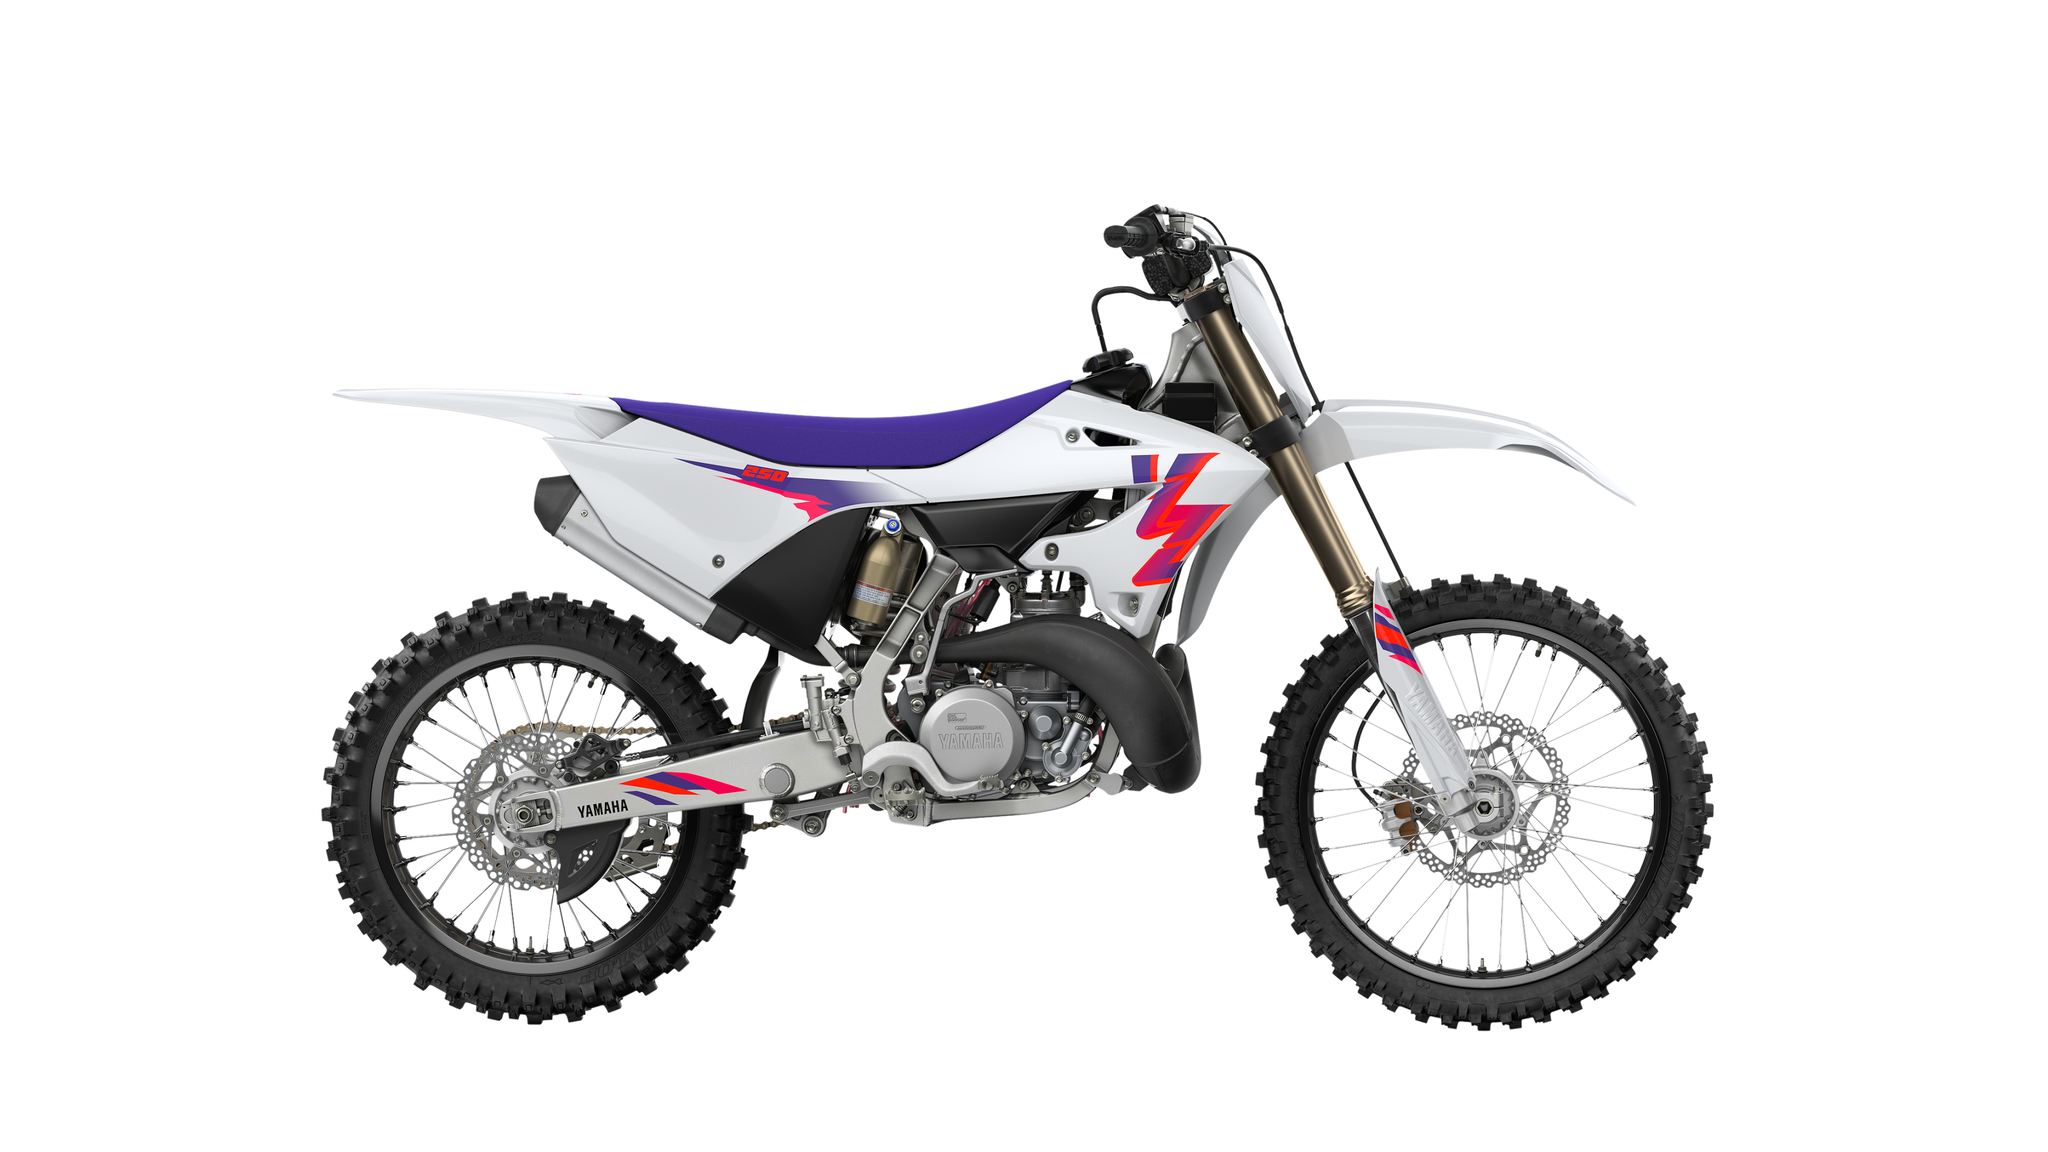 Yamaha Launches 50th Anniversary Motocross Line - Racer X